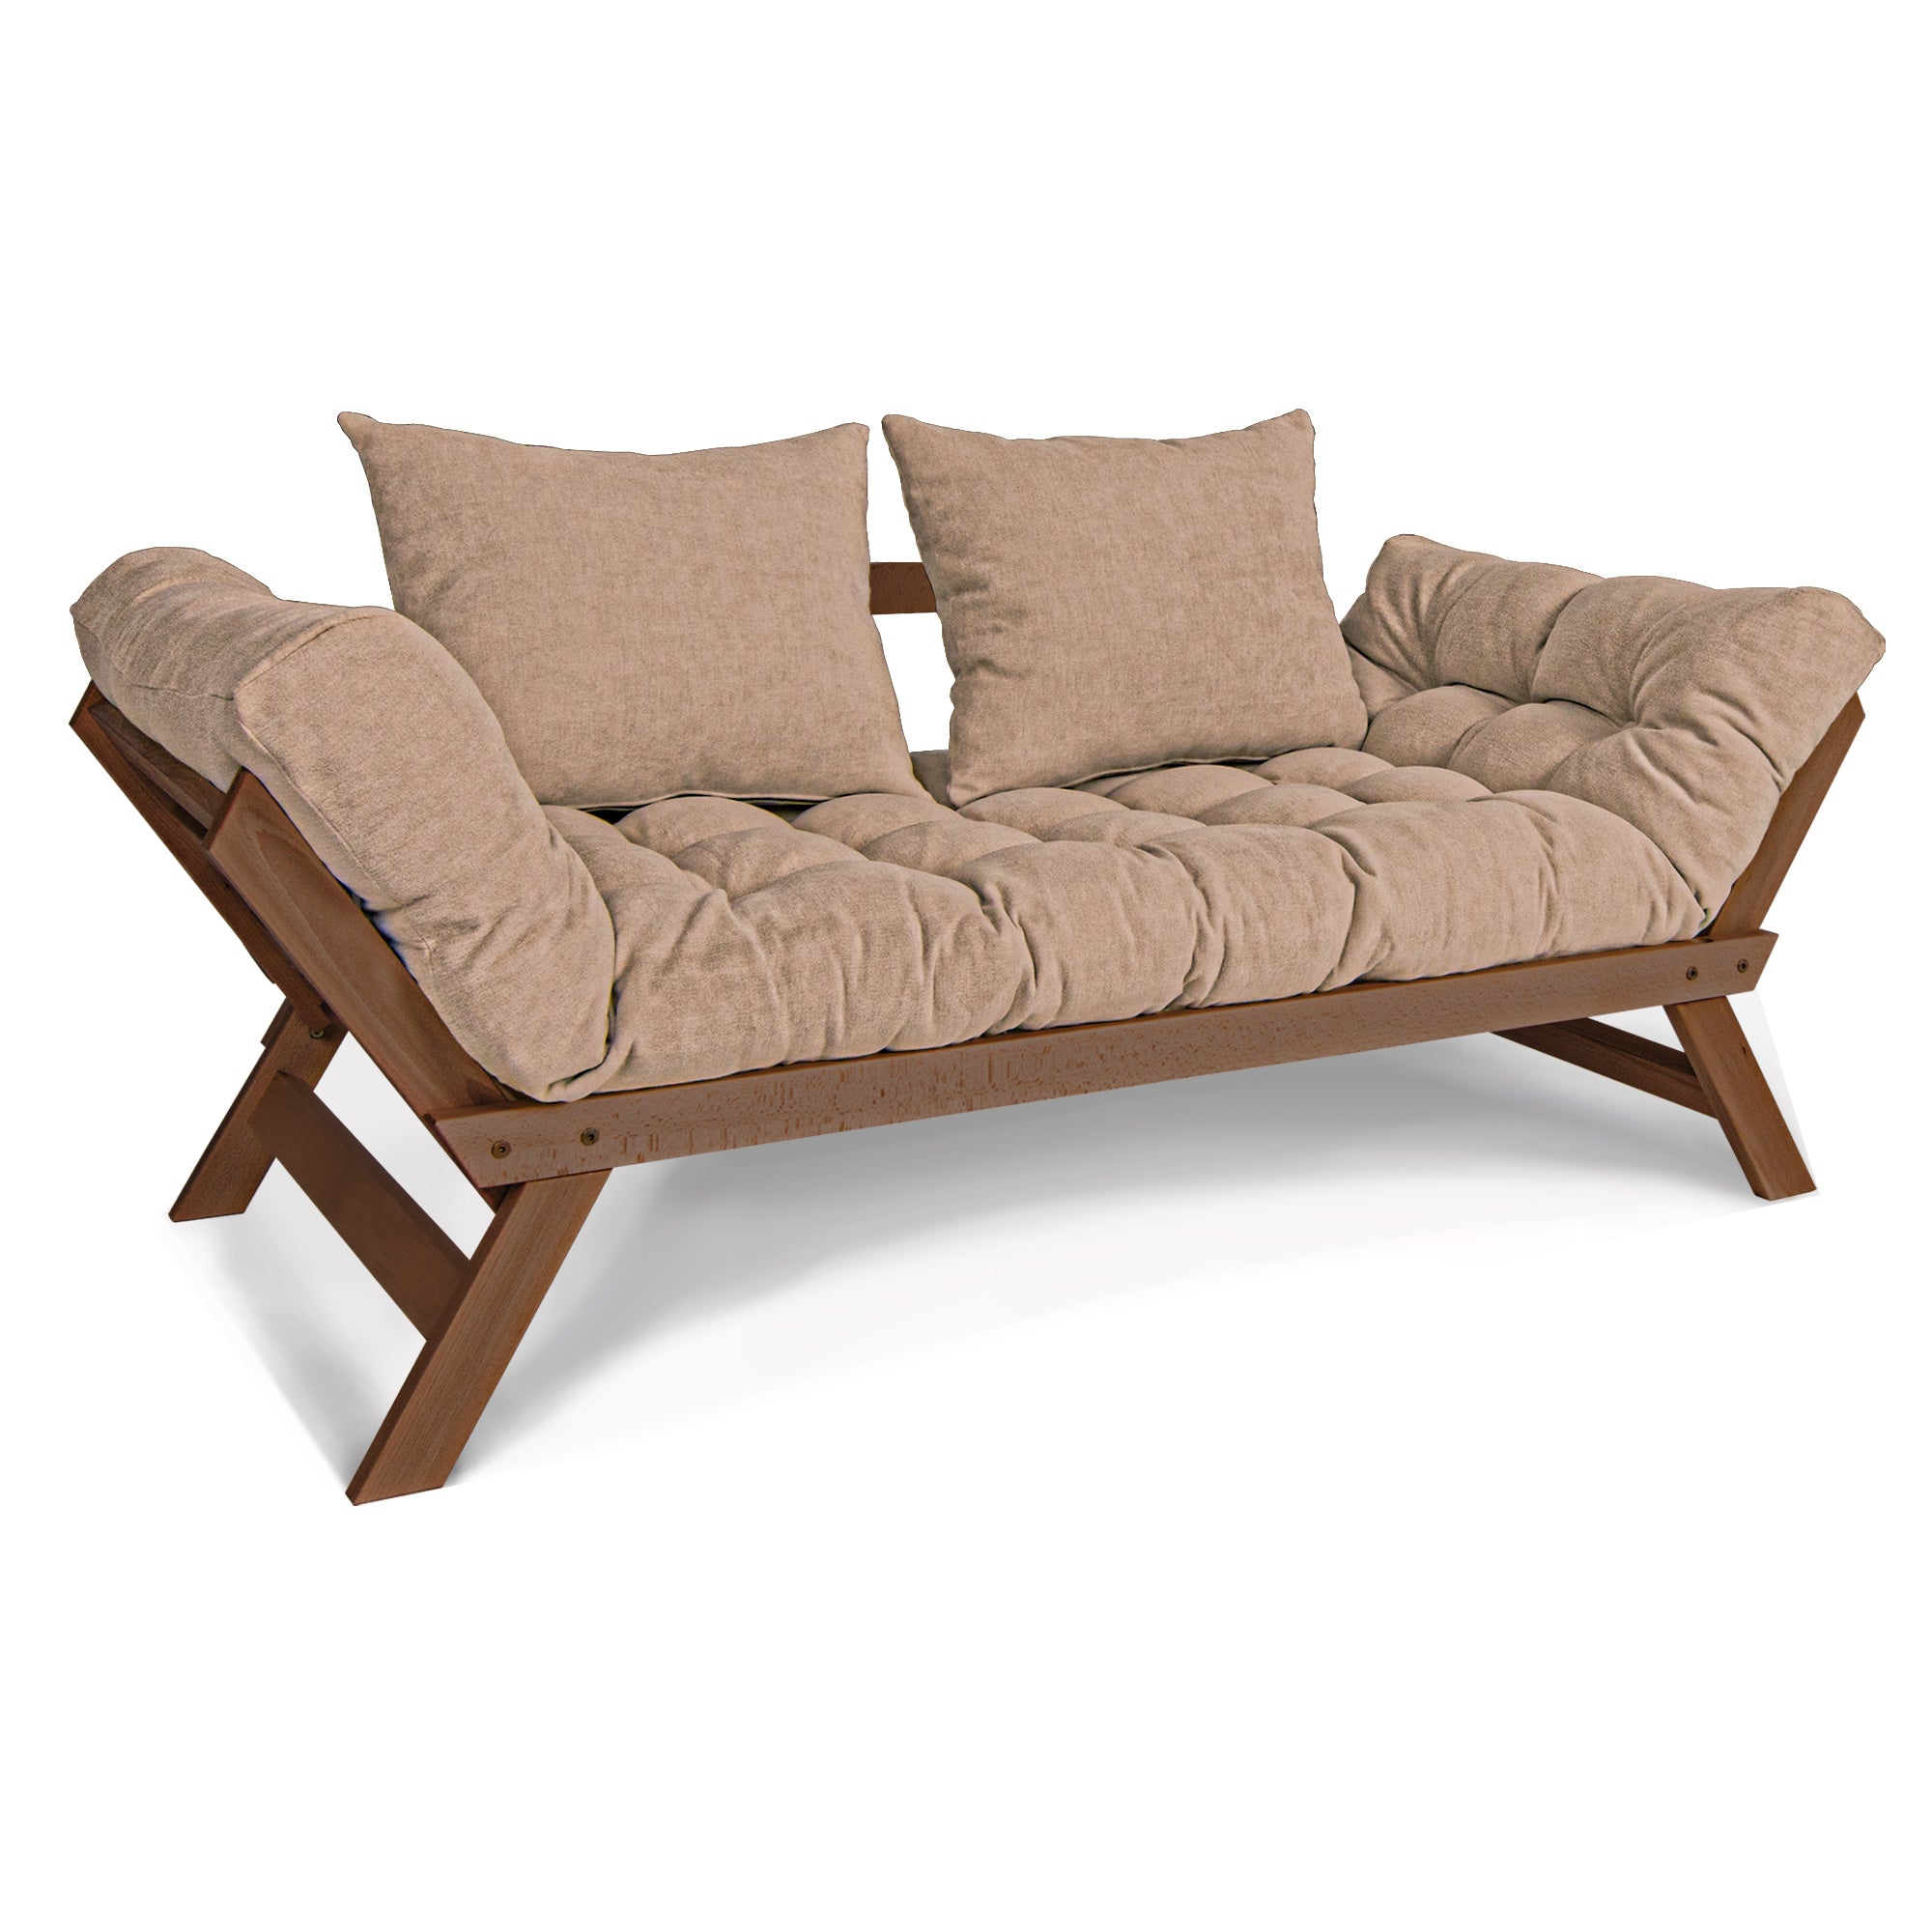 ALLEGRO Folding Sofa Bed, Beech Wood Frame, Walnut Colour upholstery beige